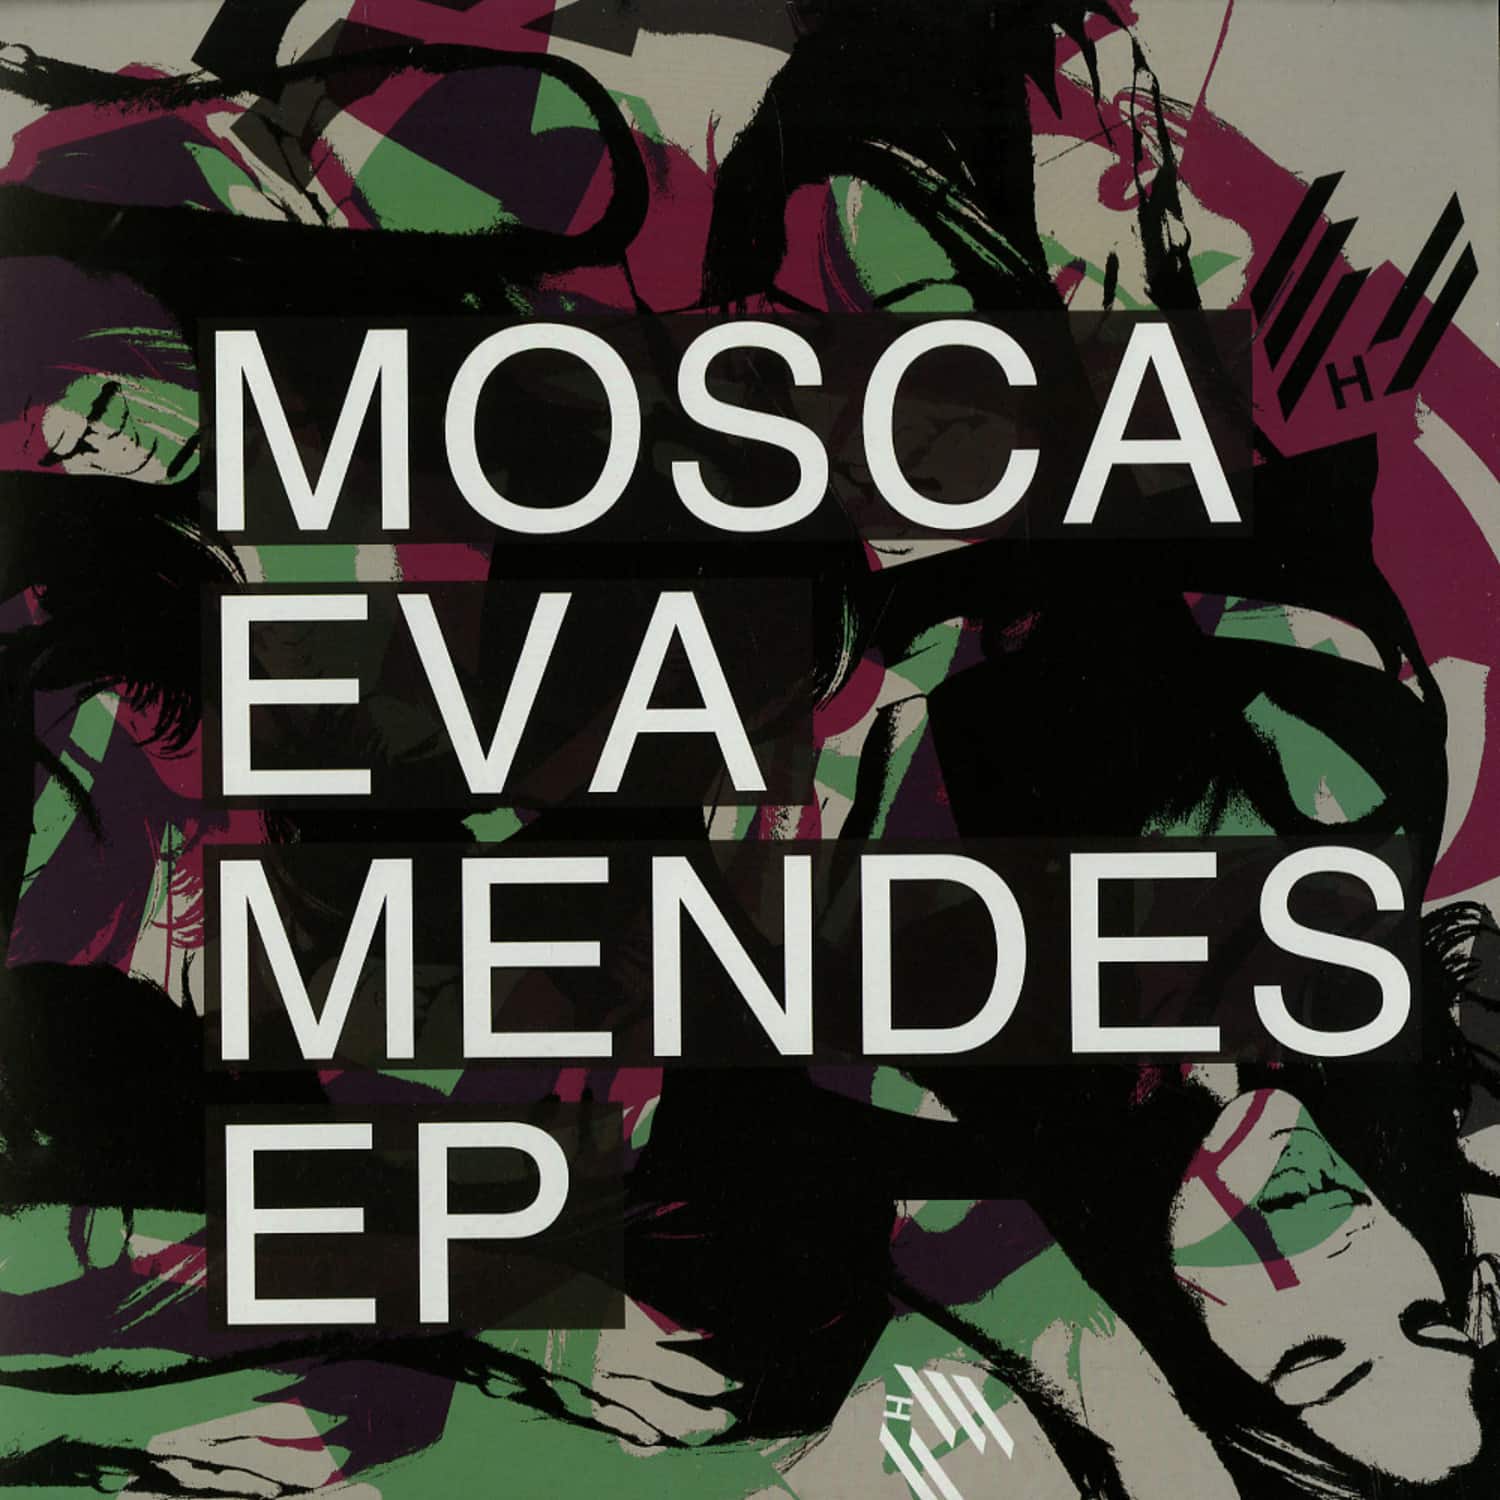 Mosca - EVA MENDES